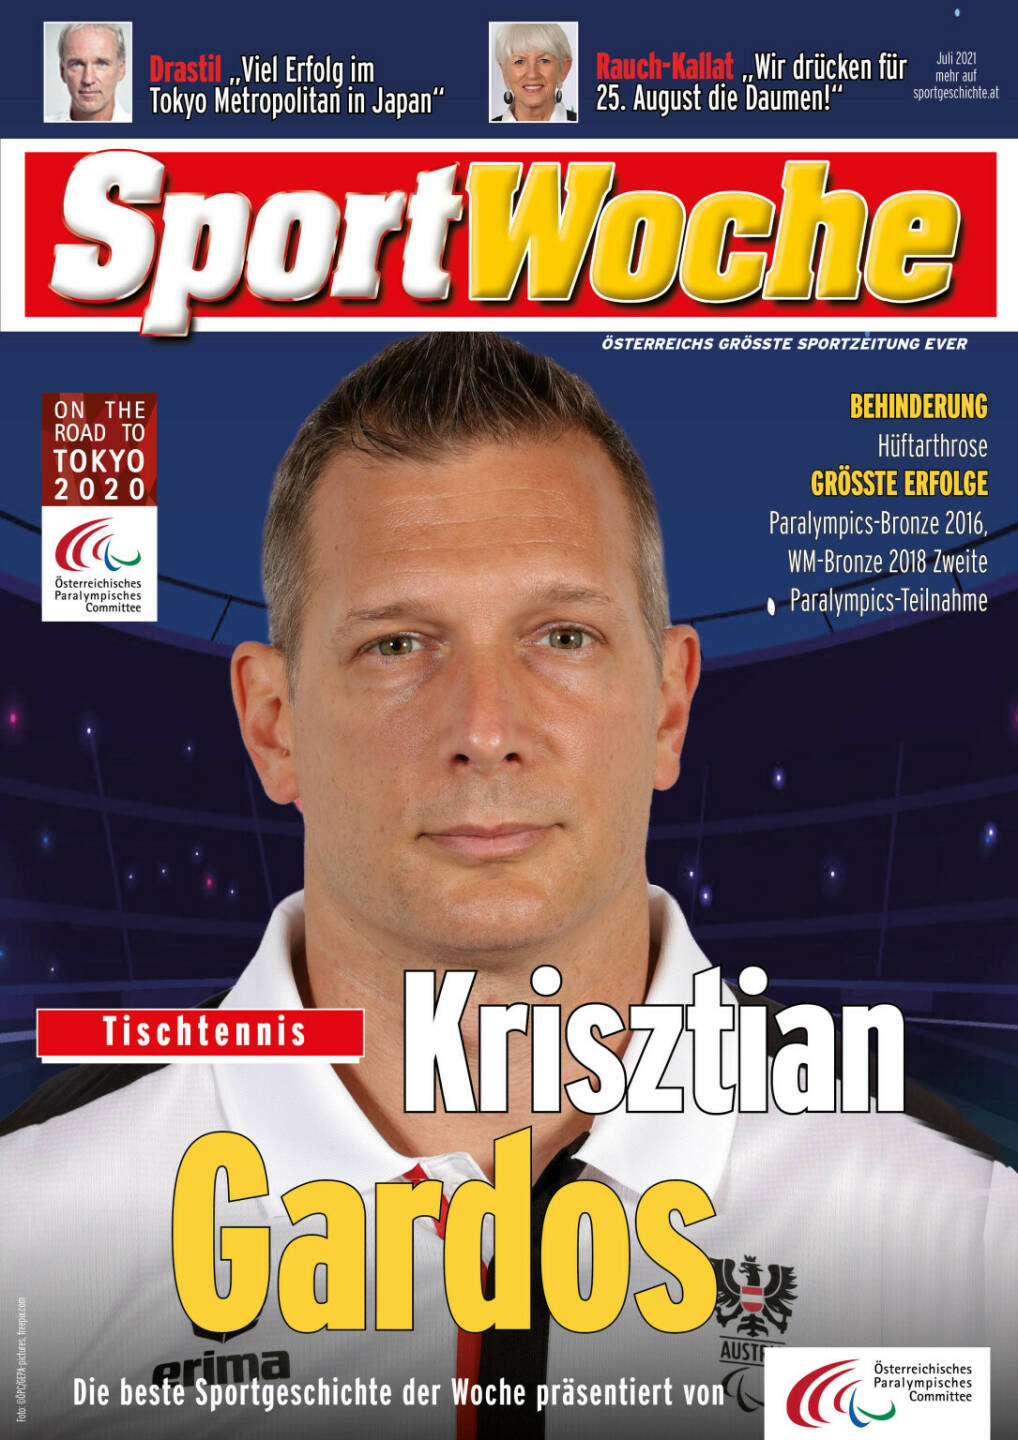 Krisztian Gardos - Behinderung Hüftarthrose, Größte Erfolge Paralympics-Bronze 2016, WM-Bronze 2018, Zweite Paralympics-Teilnahme